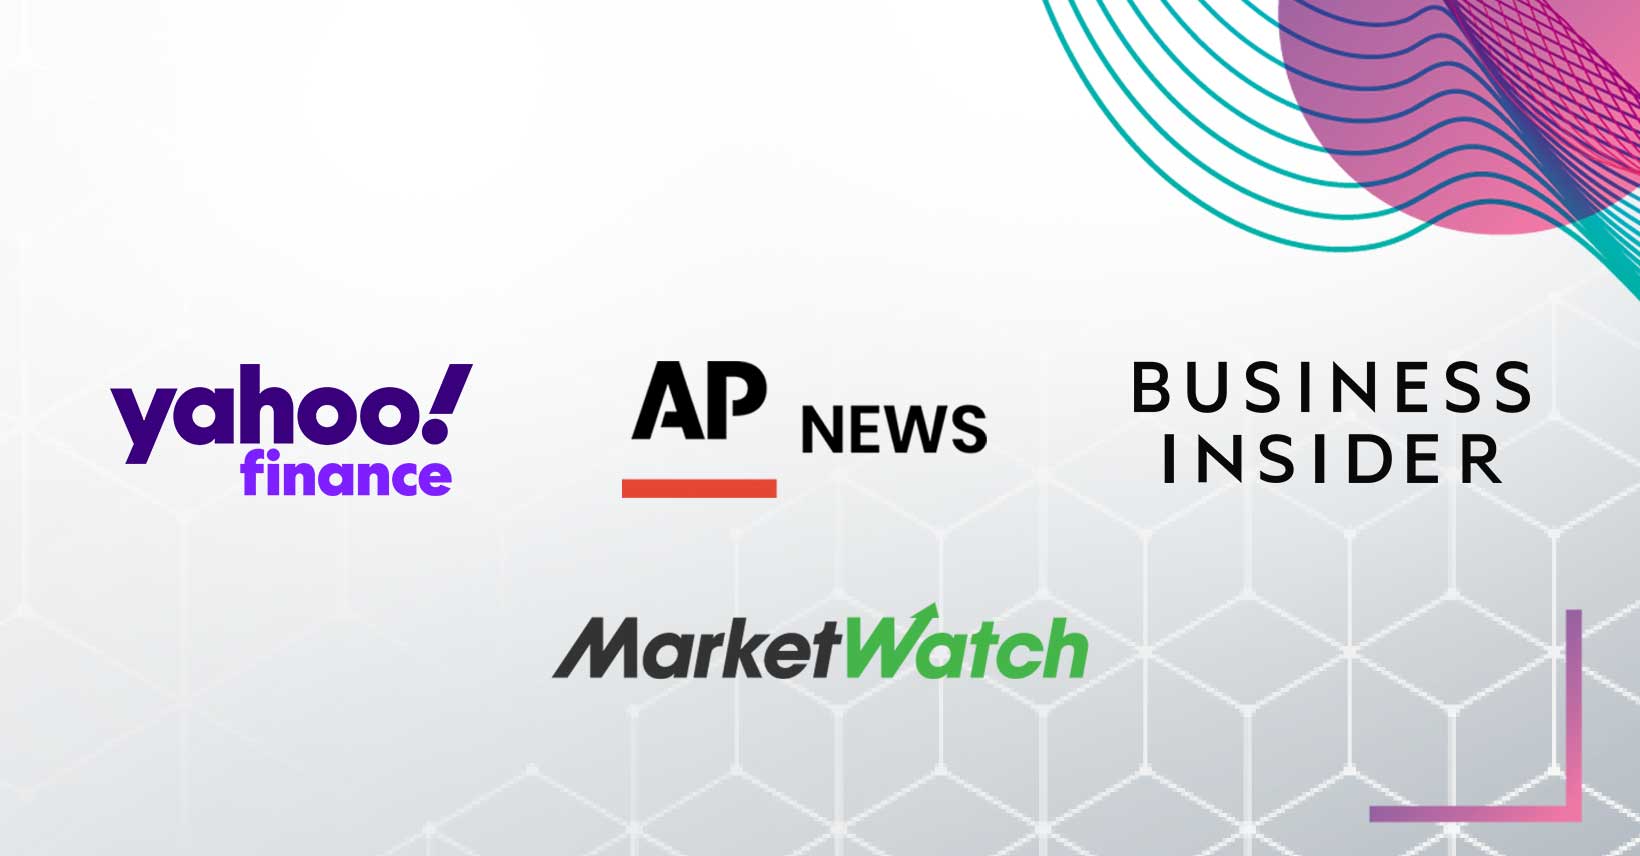 Yahoo Finance AP News Business Insider MarketWatch Press Release Service NZ